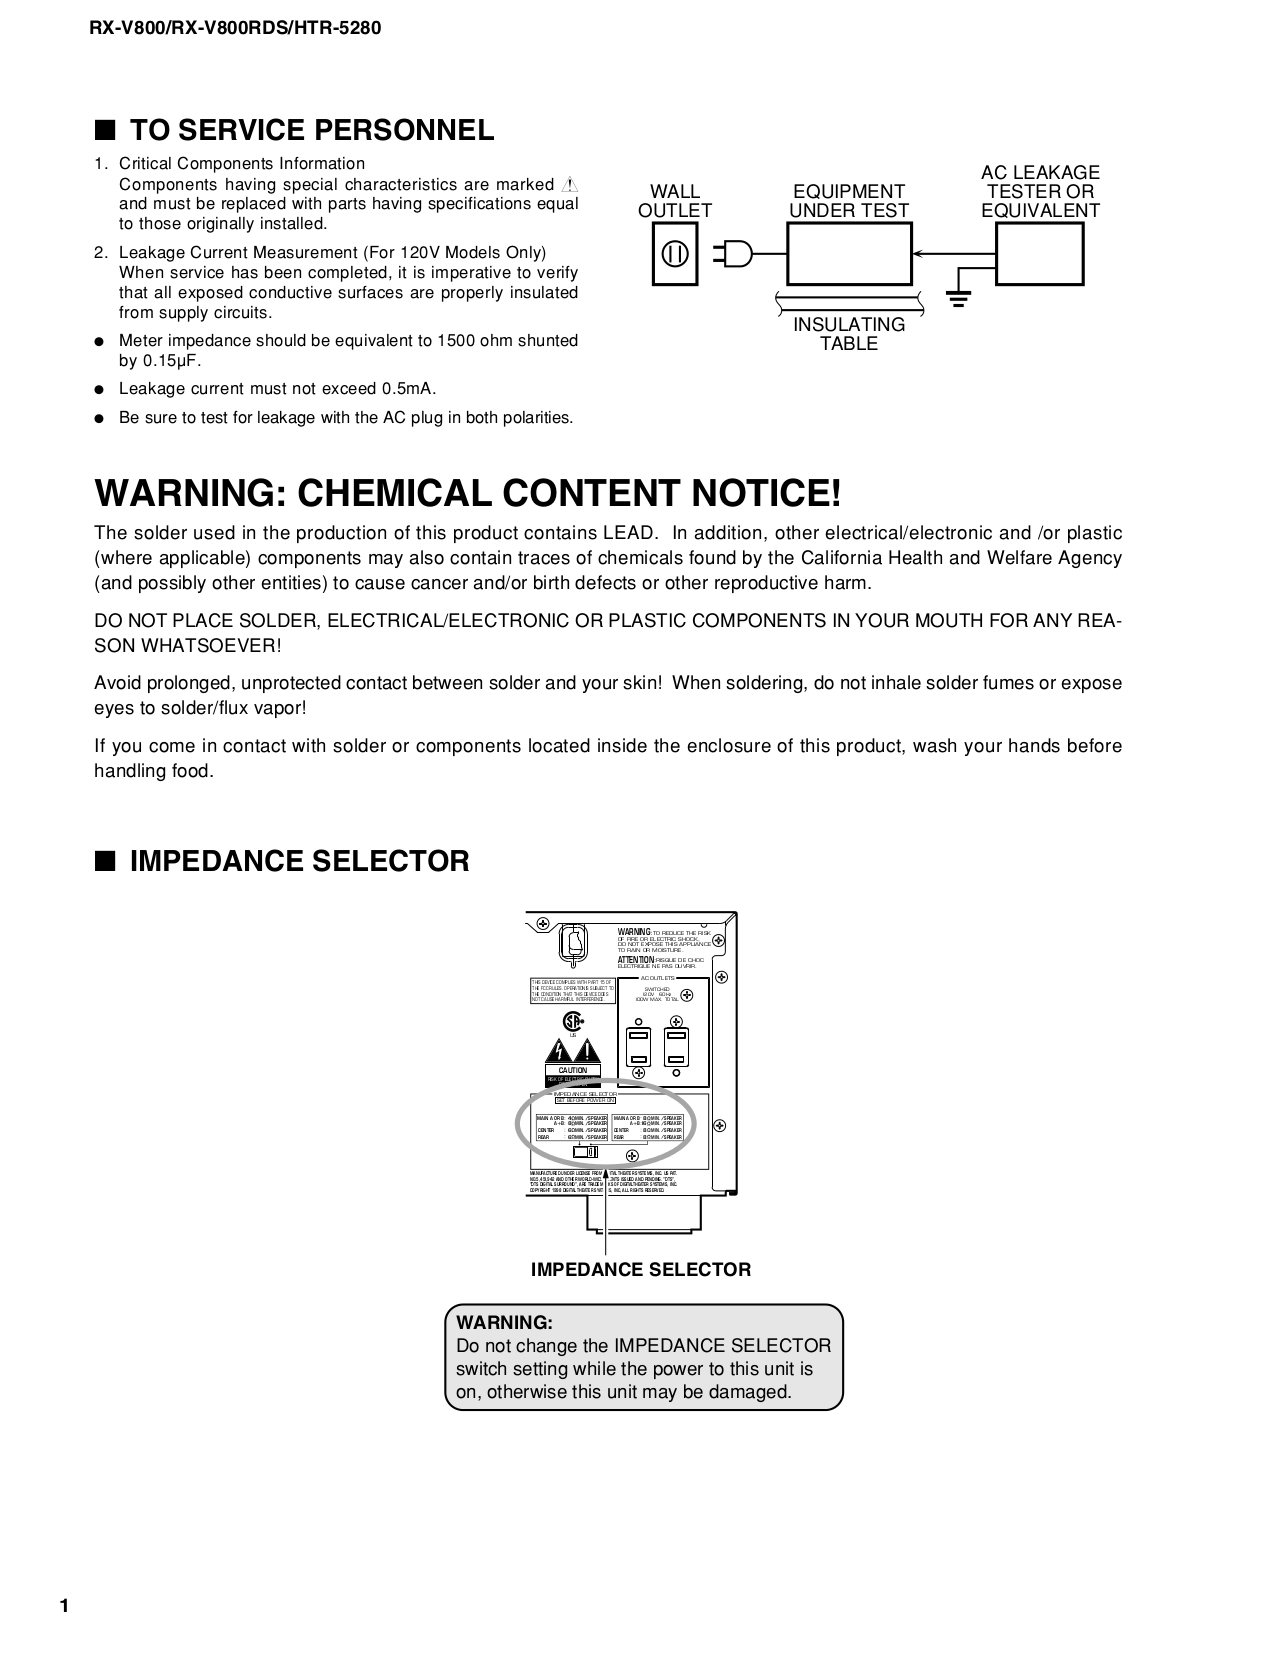 PDF manual for Yamaha Receiver RX-V800